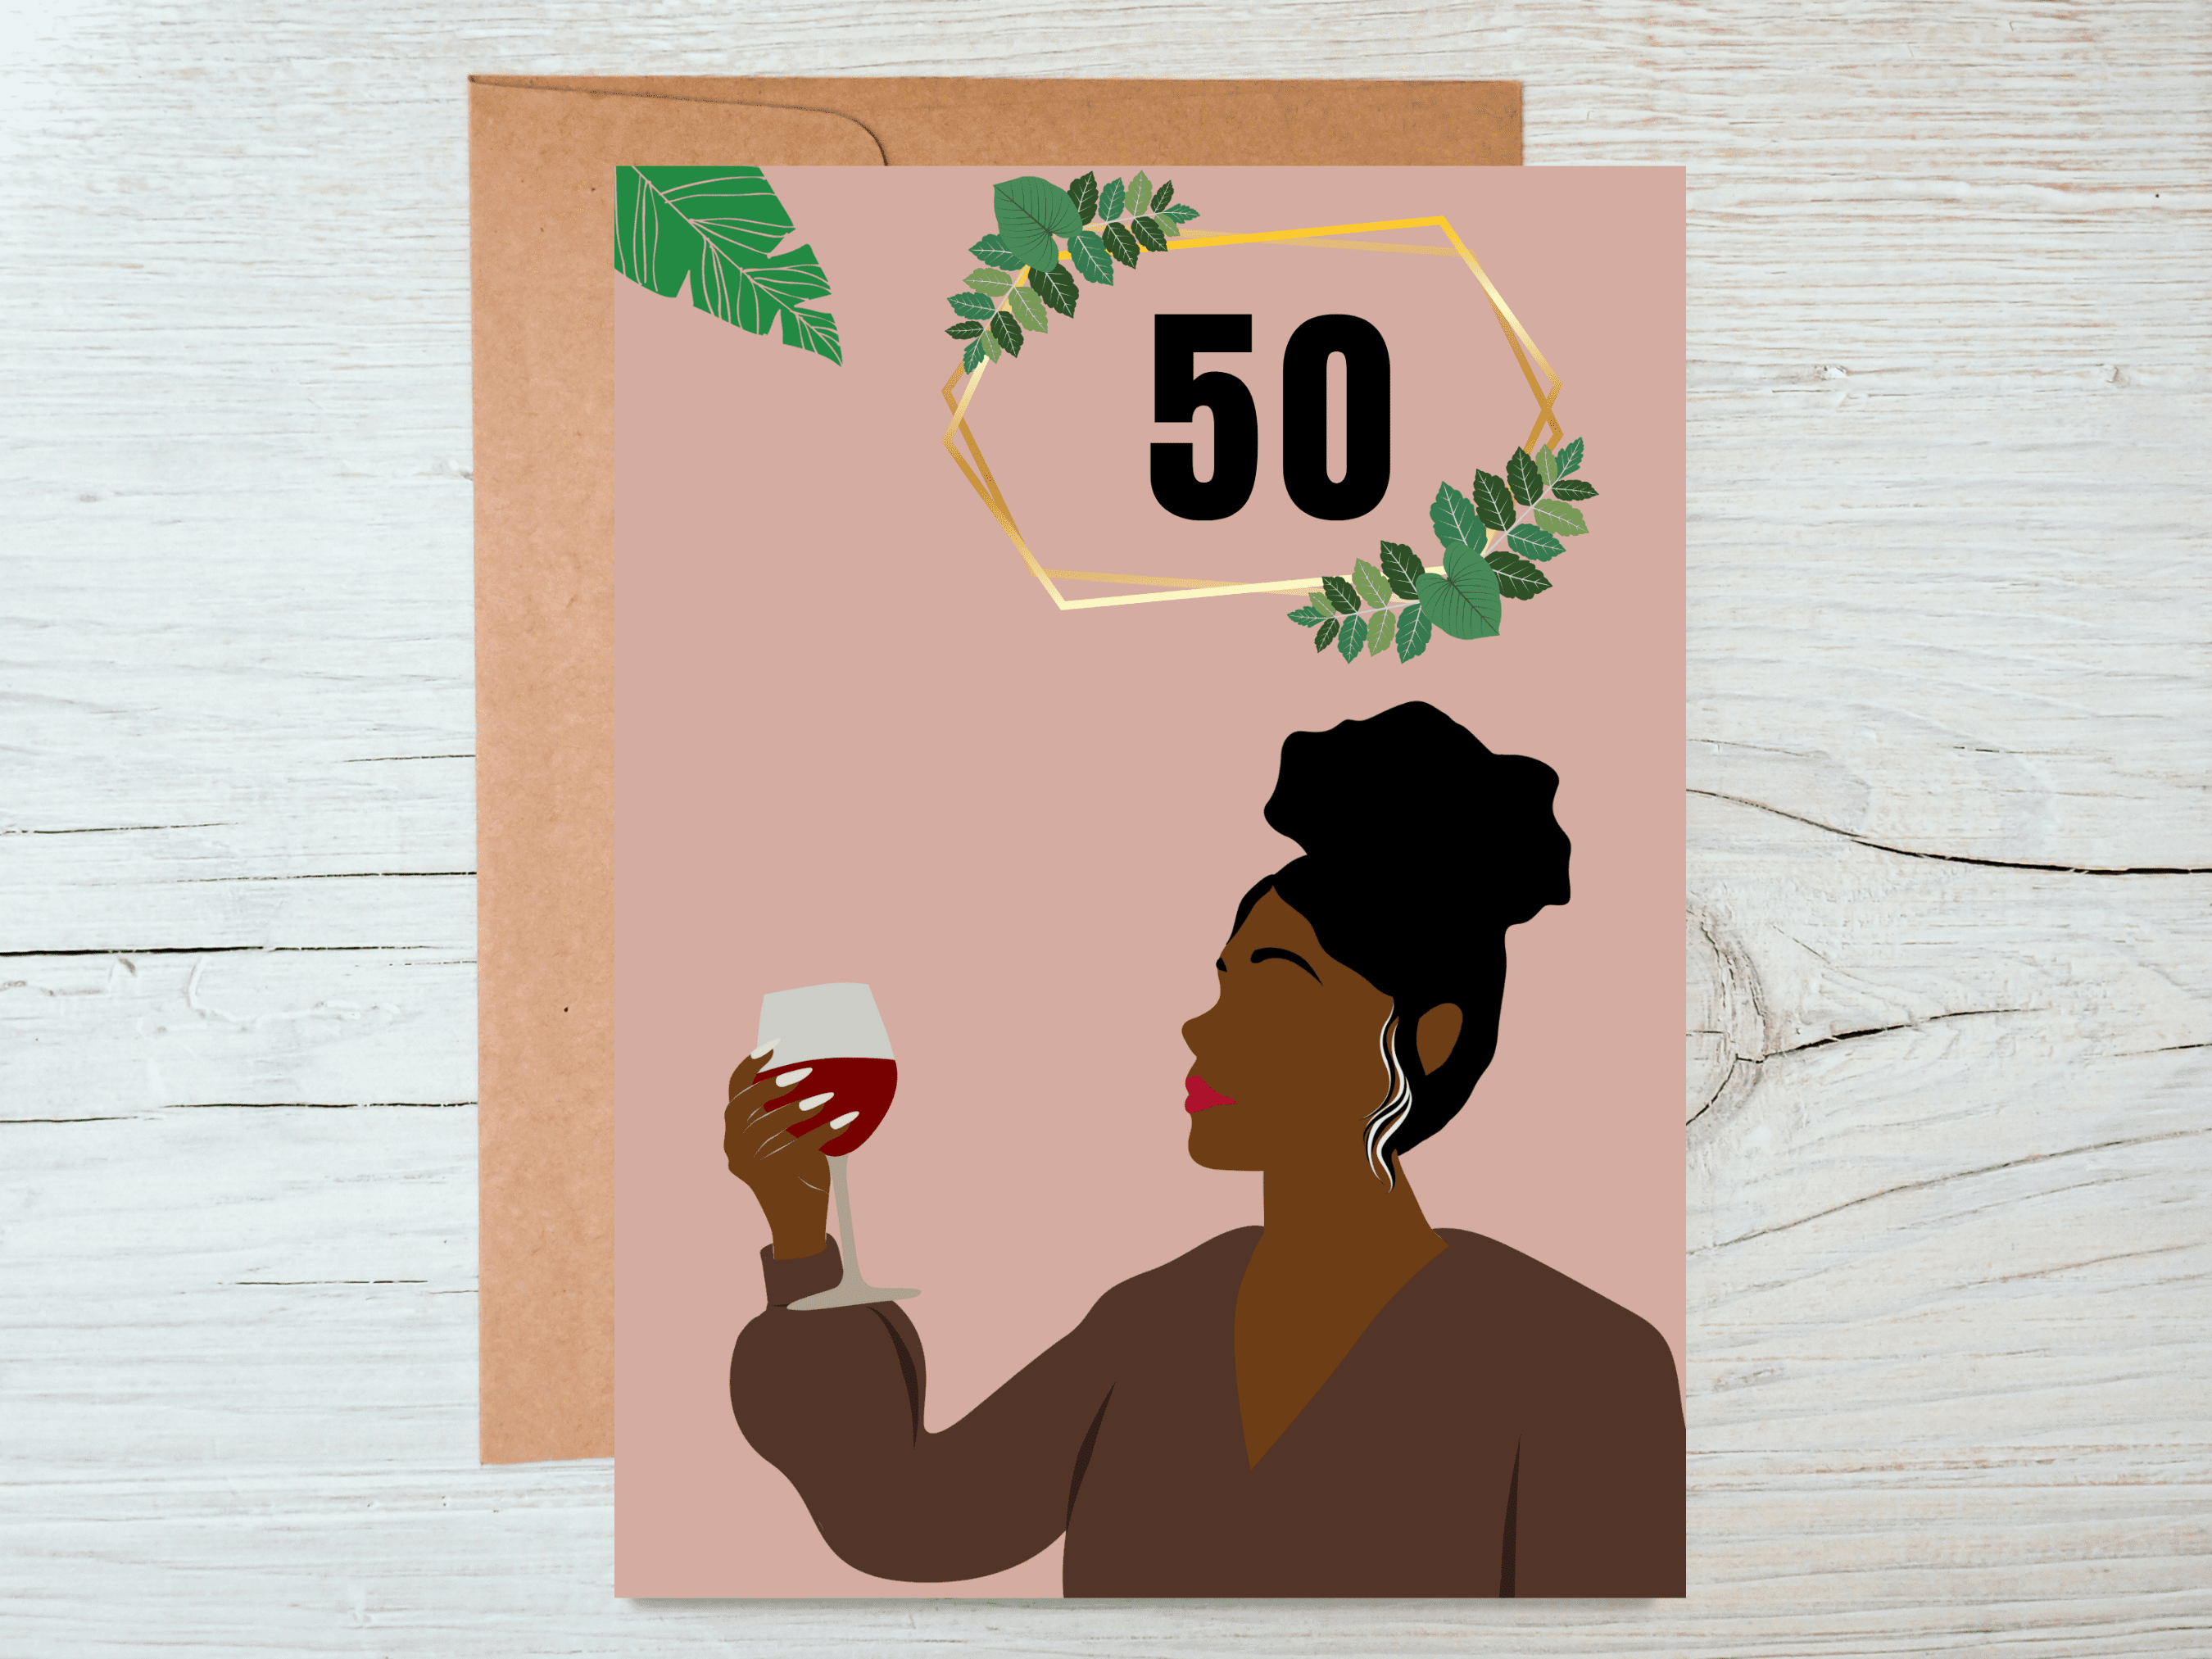 50th and 60th Black Woman Birthday Card